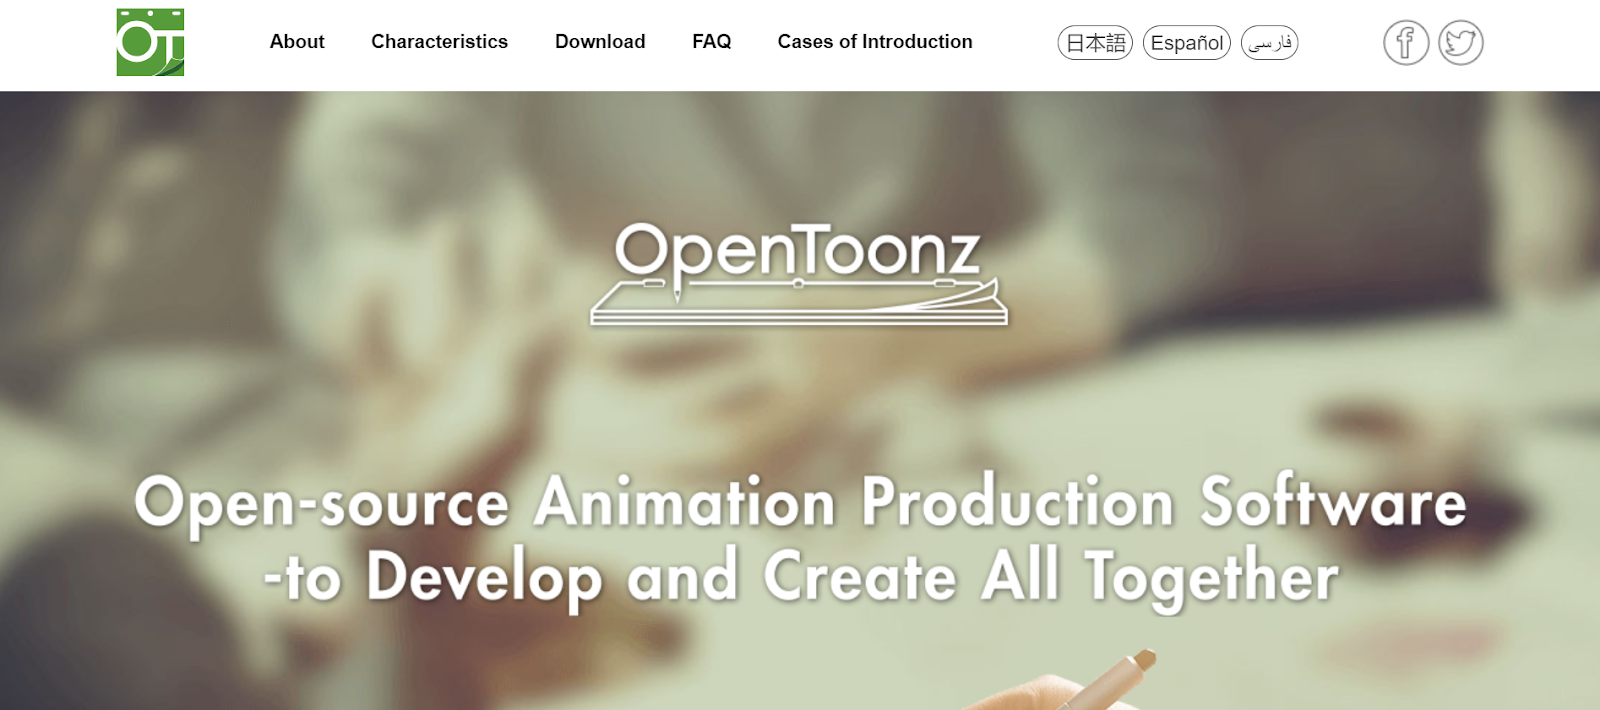 opentoonz motion graphics software